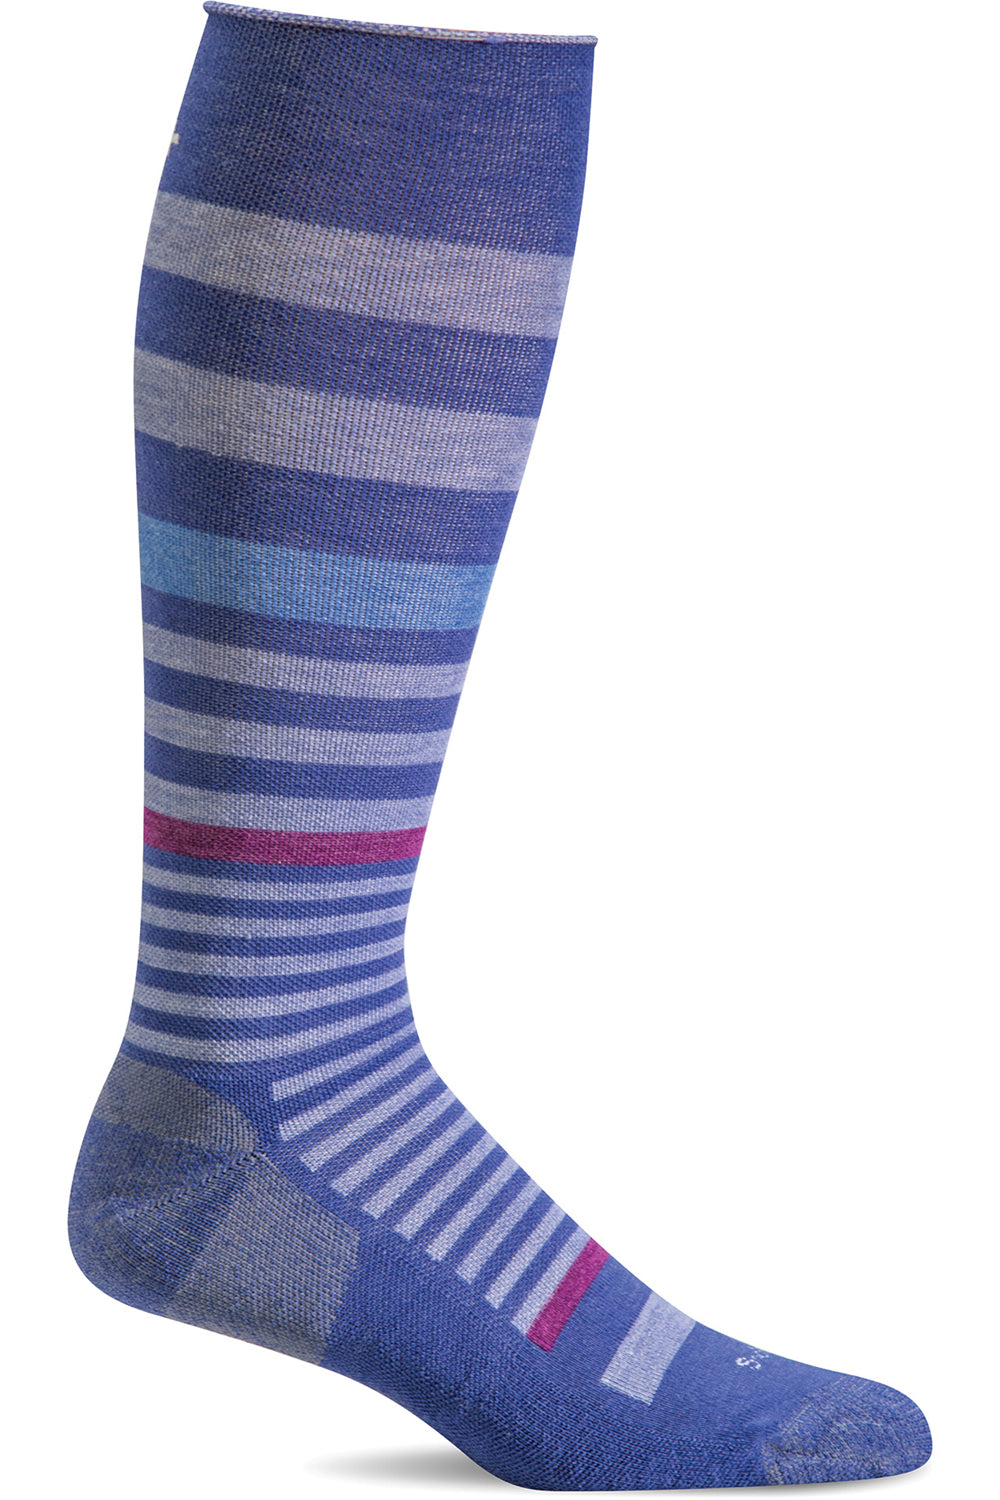 Sockwell Women's Orbital Stripe Sock in Hyacinth color from the side